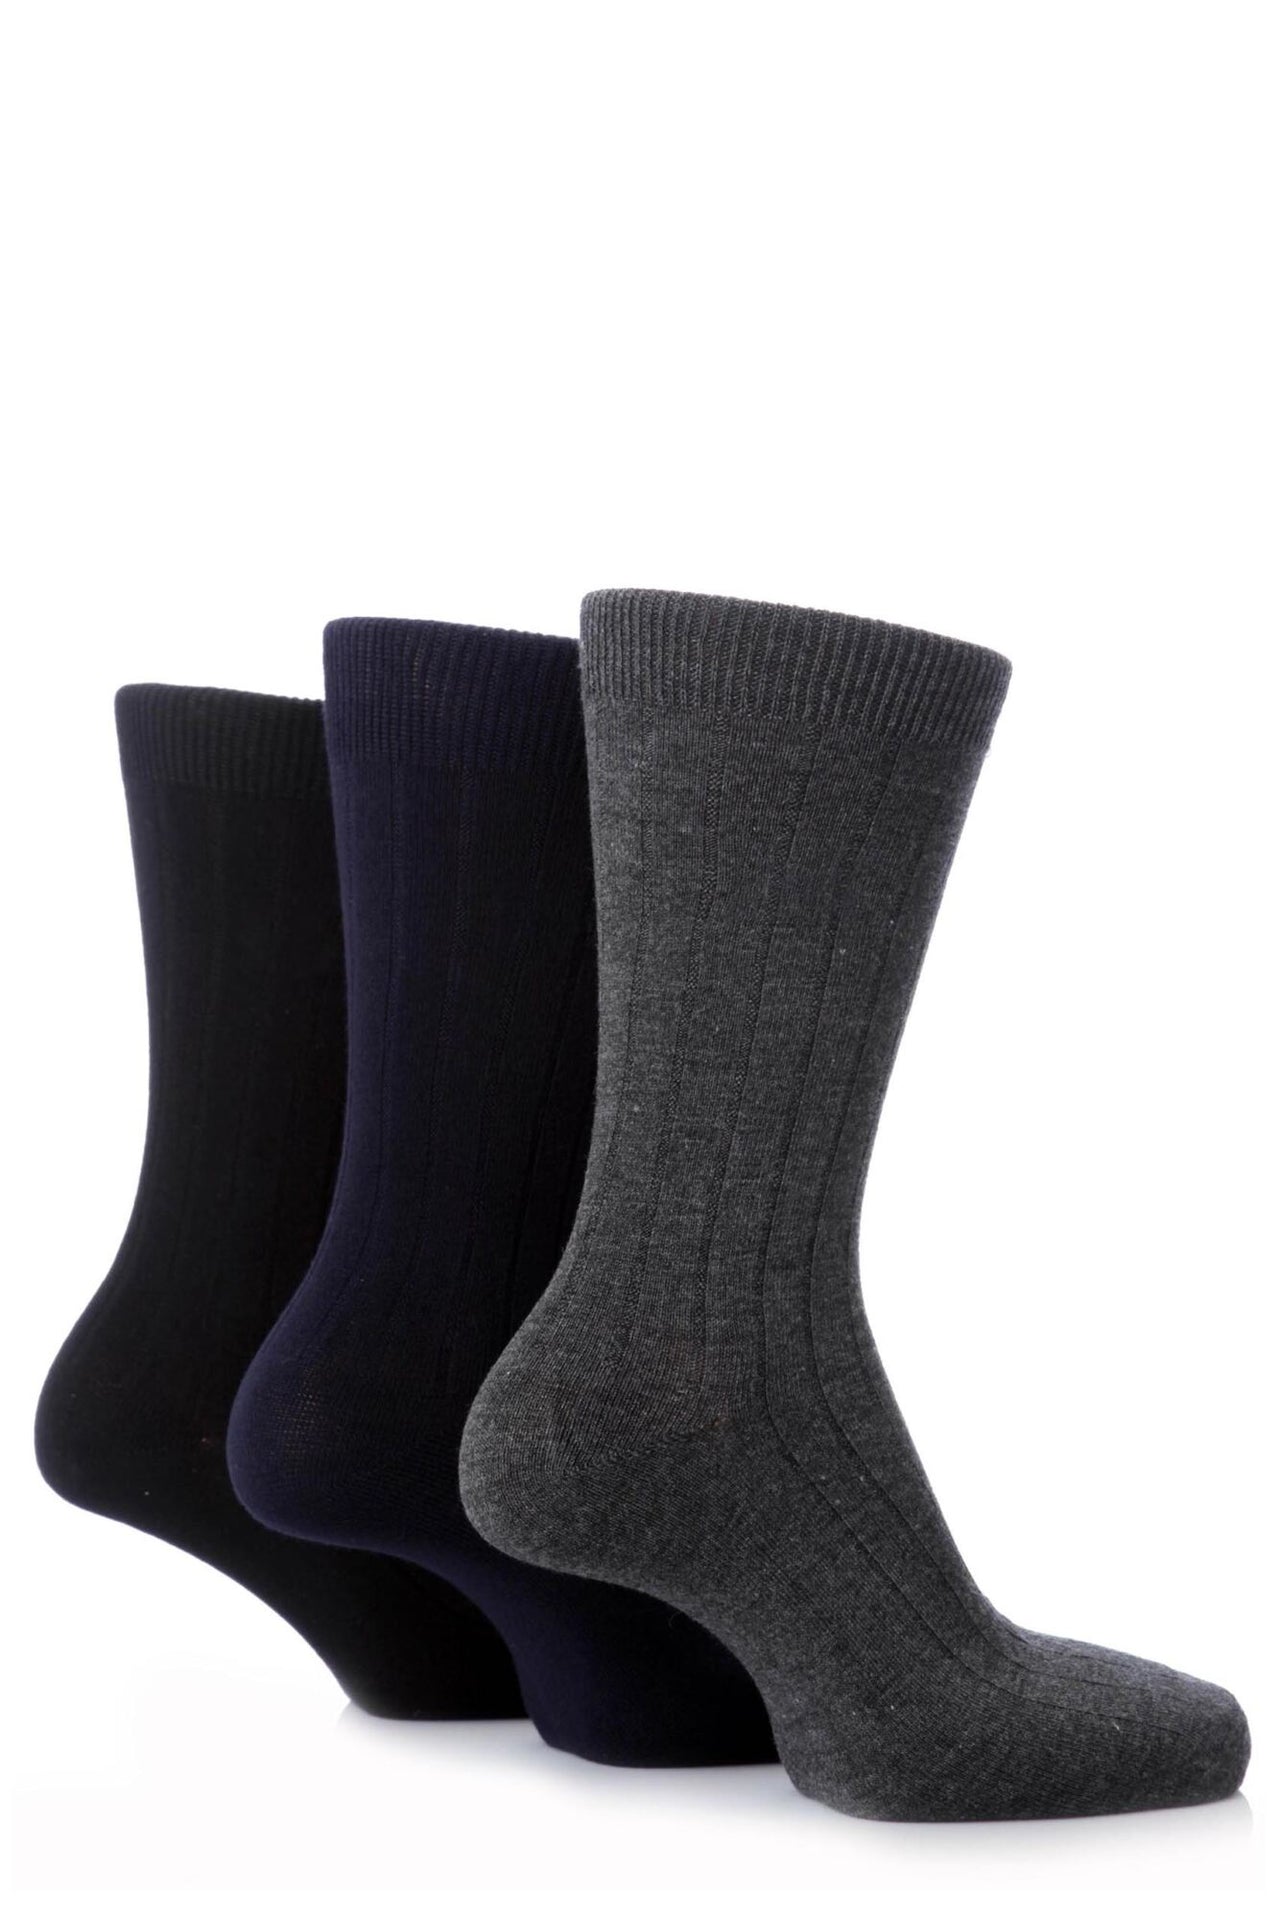 3 Pair Pringle Bamboo Rib Socks - Black/ Navy/Grey